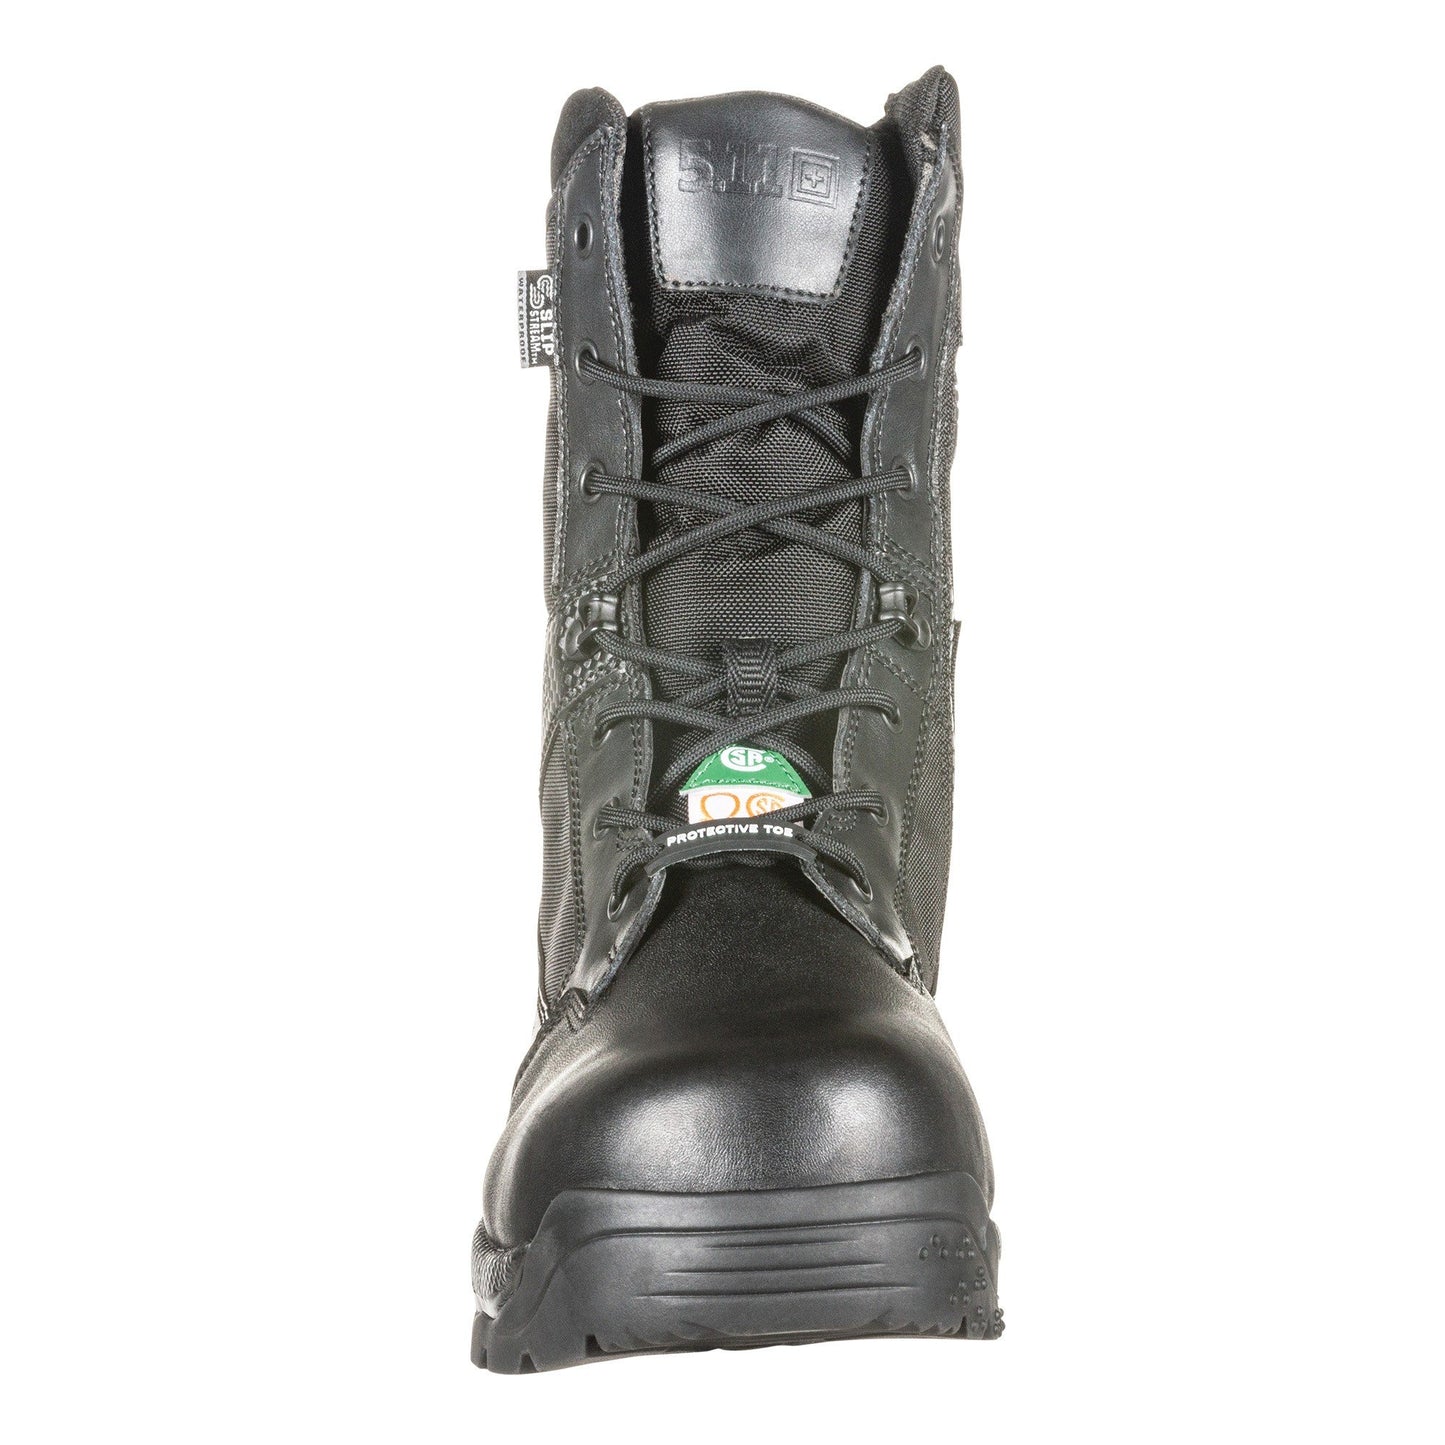 12026 - ATAC 8" Shield Side Zipper Boot